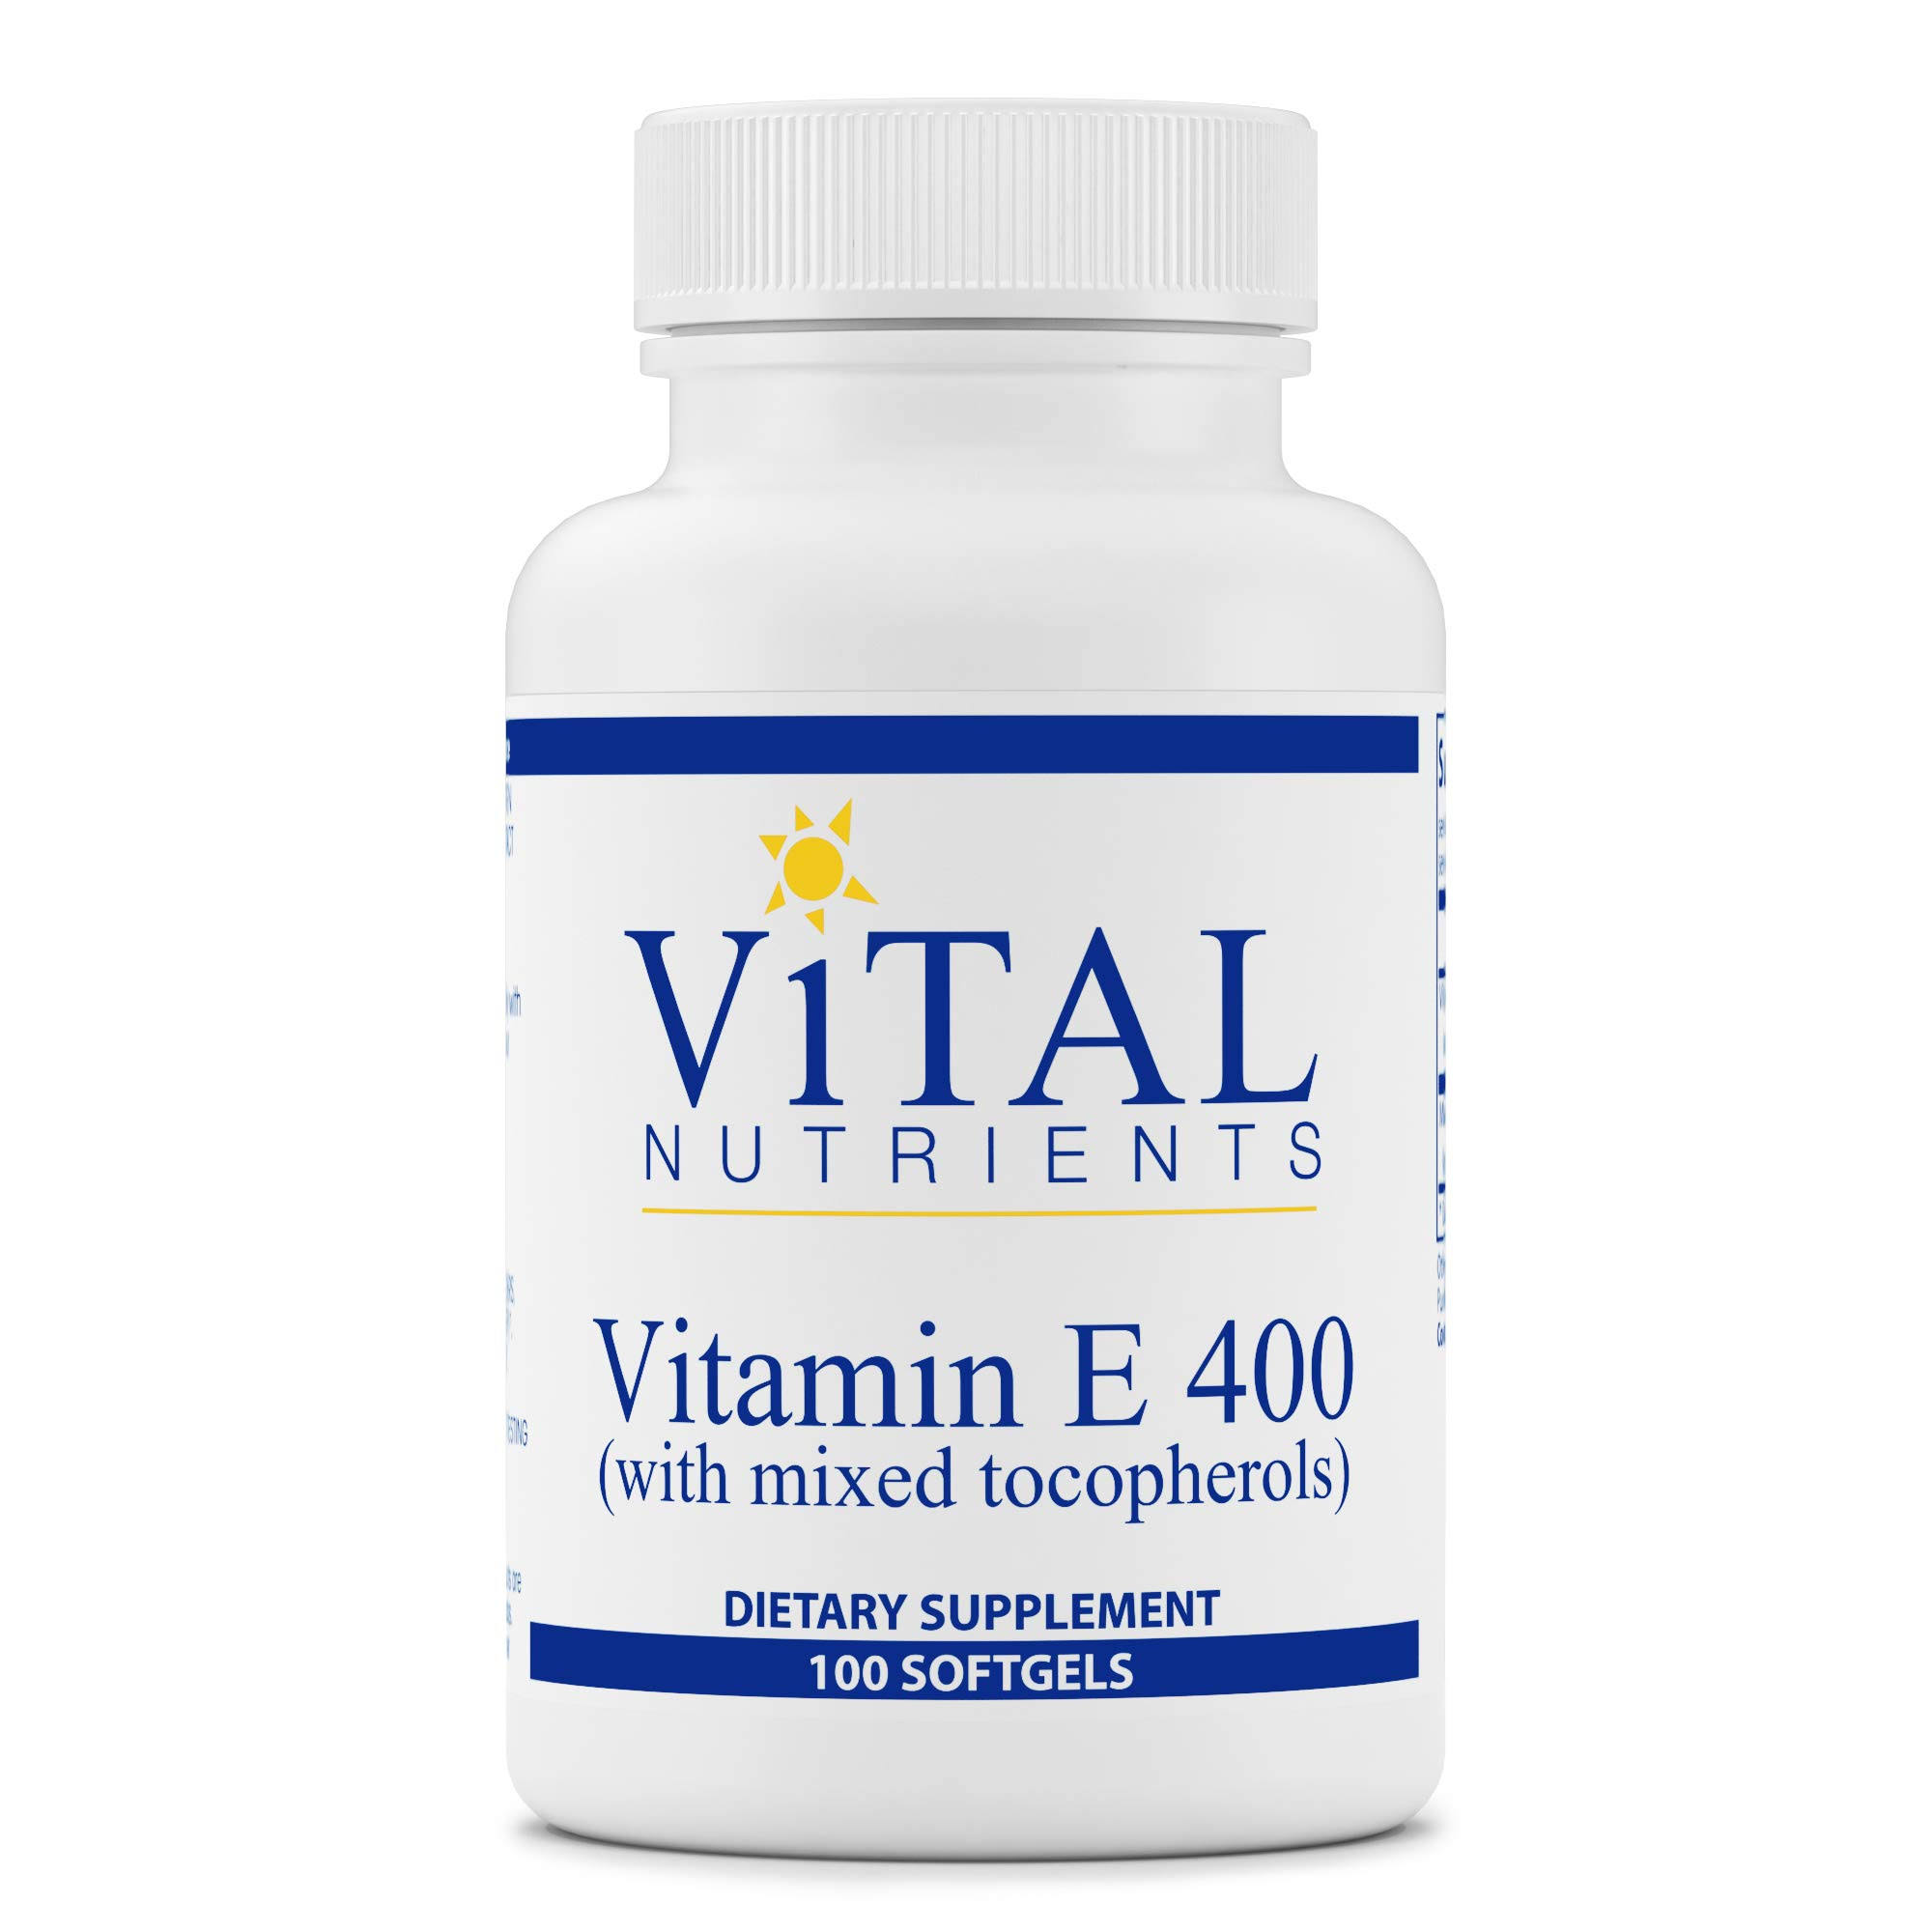 Vital Nutrients Vitamin E 400 Supplement - with Mixed Tocopherols, 100 Softgels